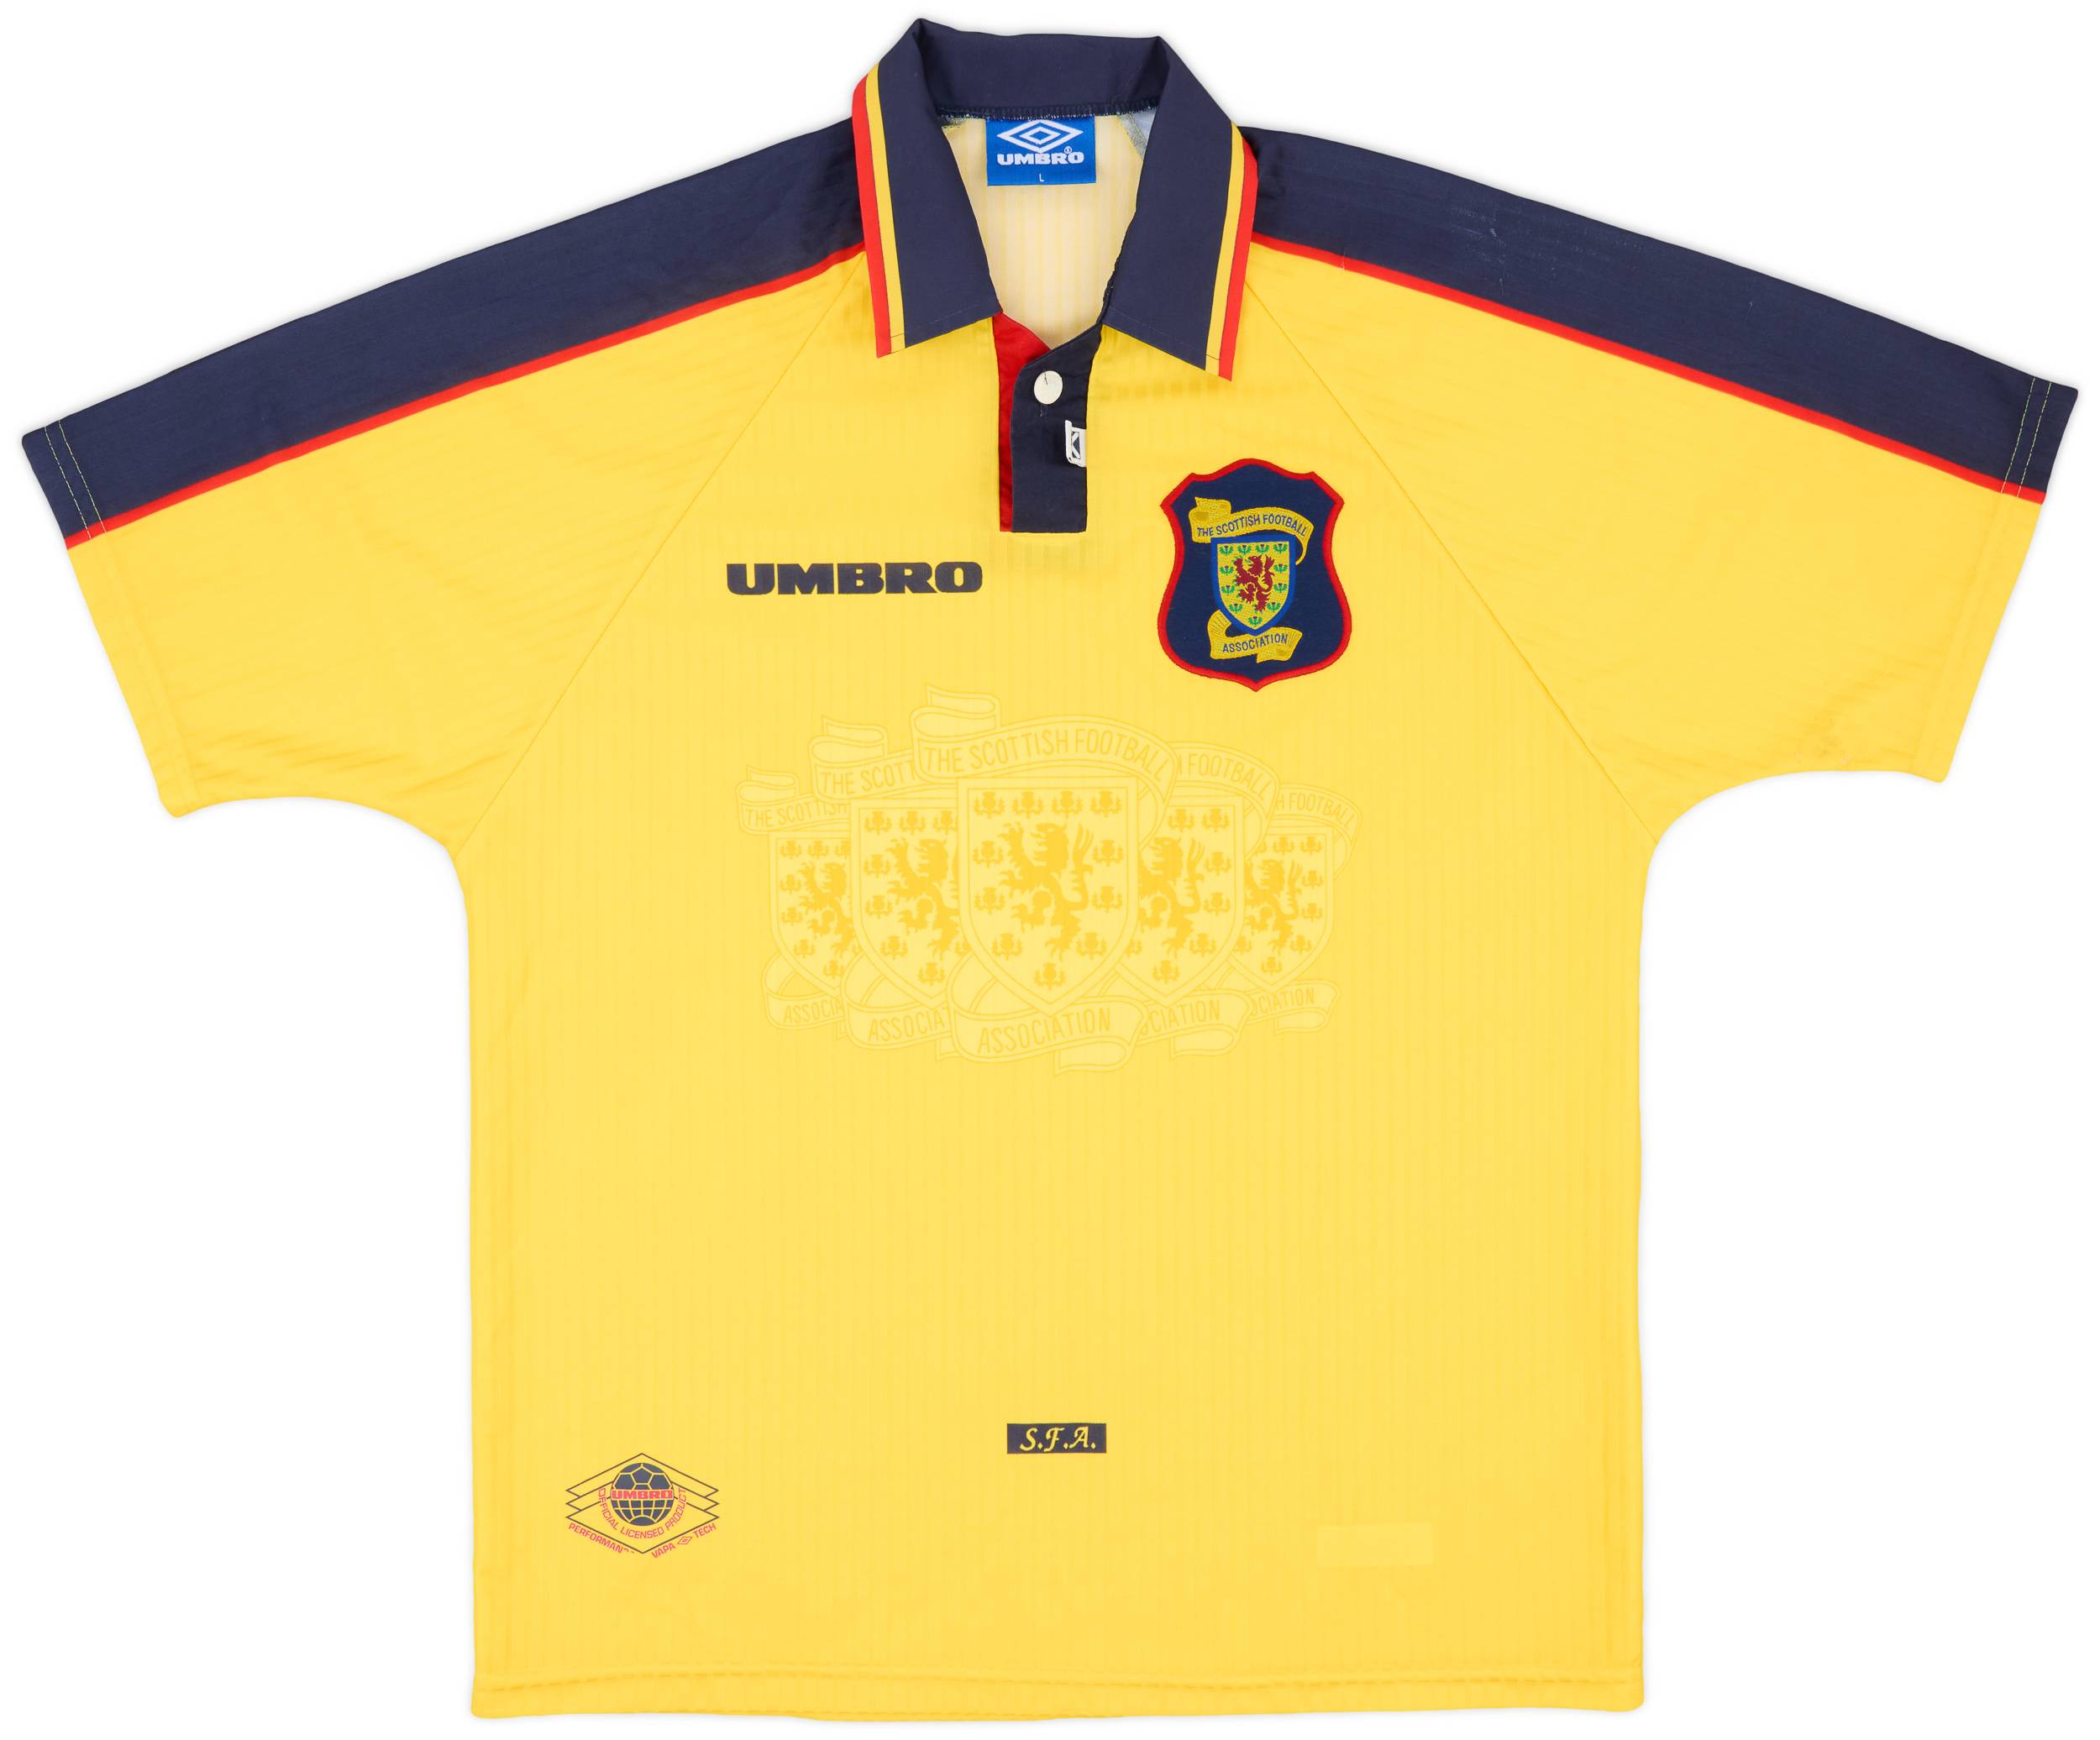 1996-99 Scotland Away Shirt - 5/10 - (L)